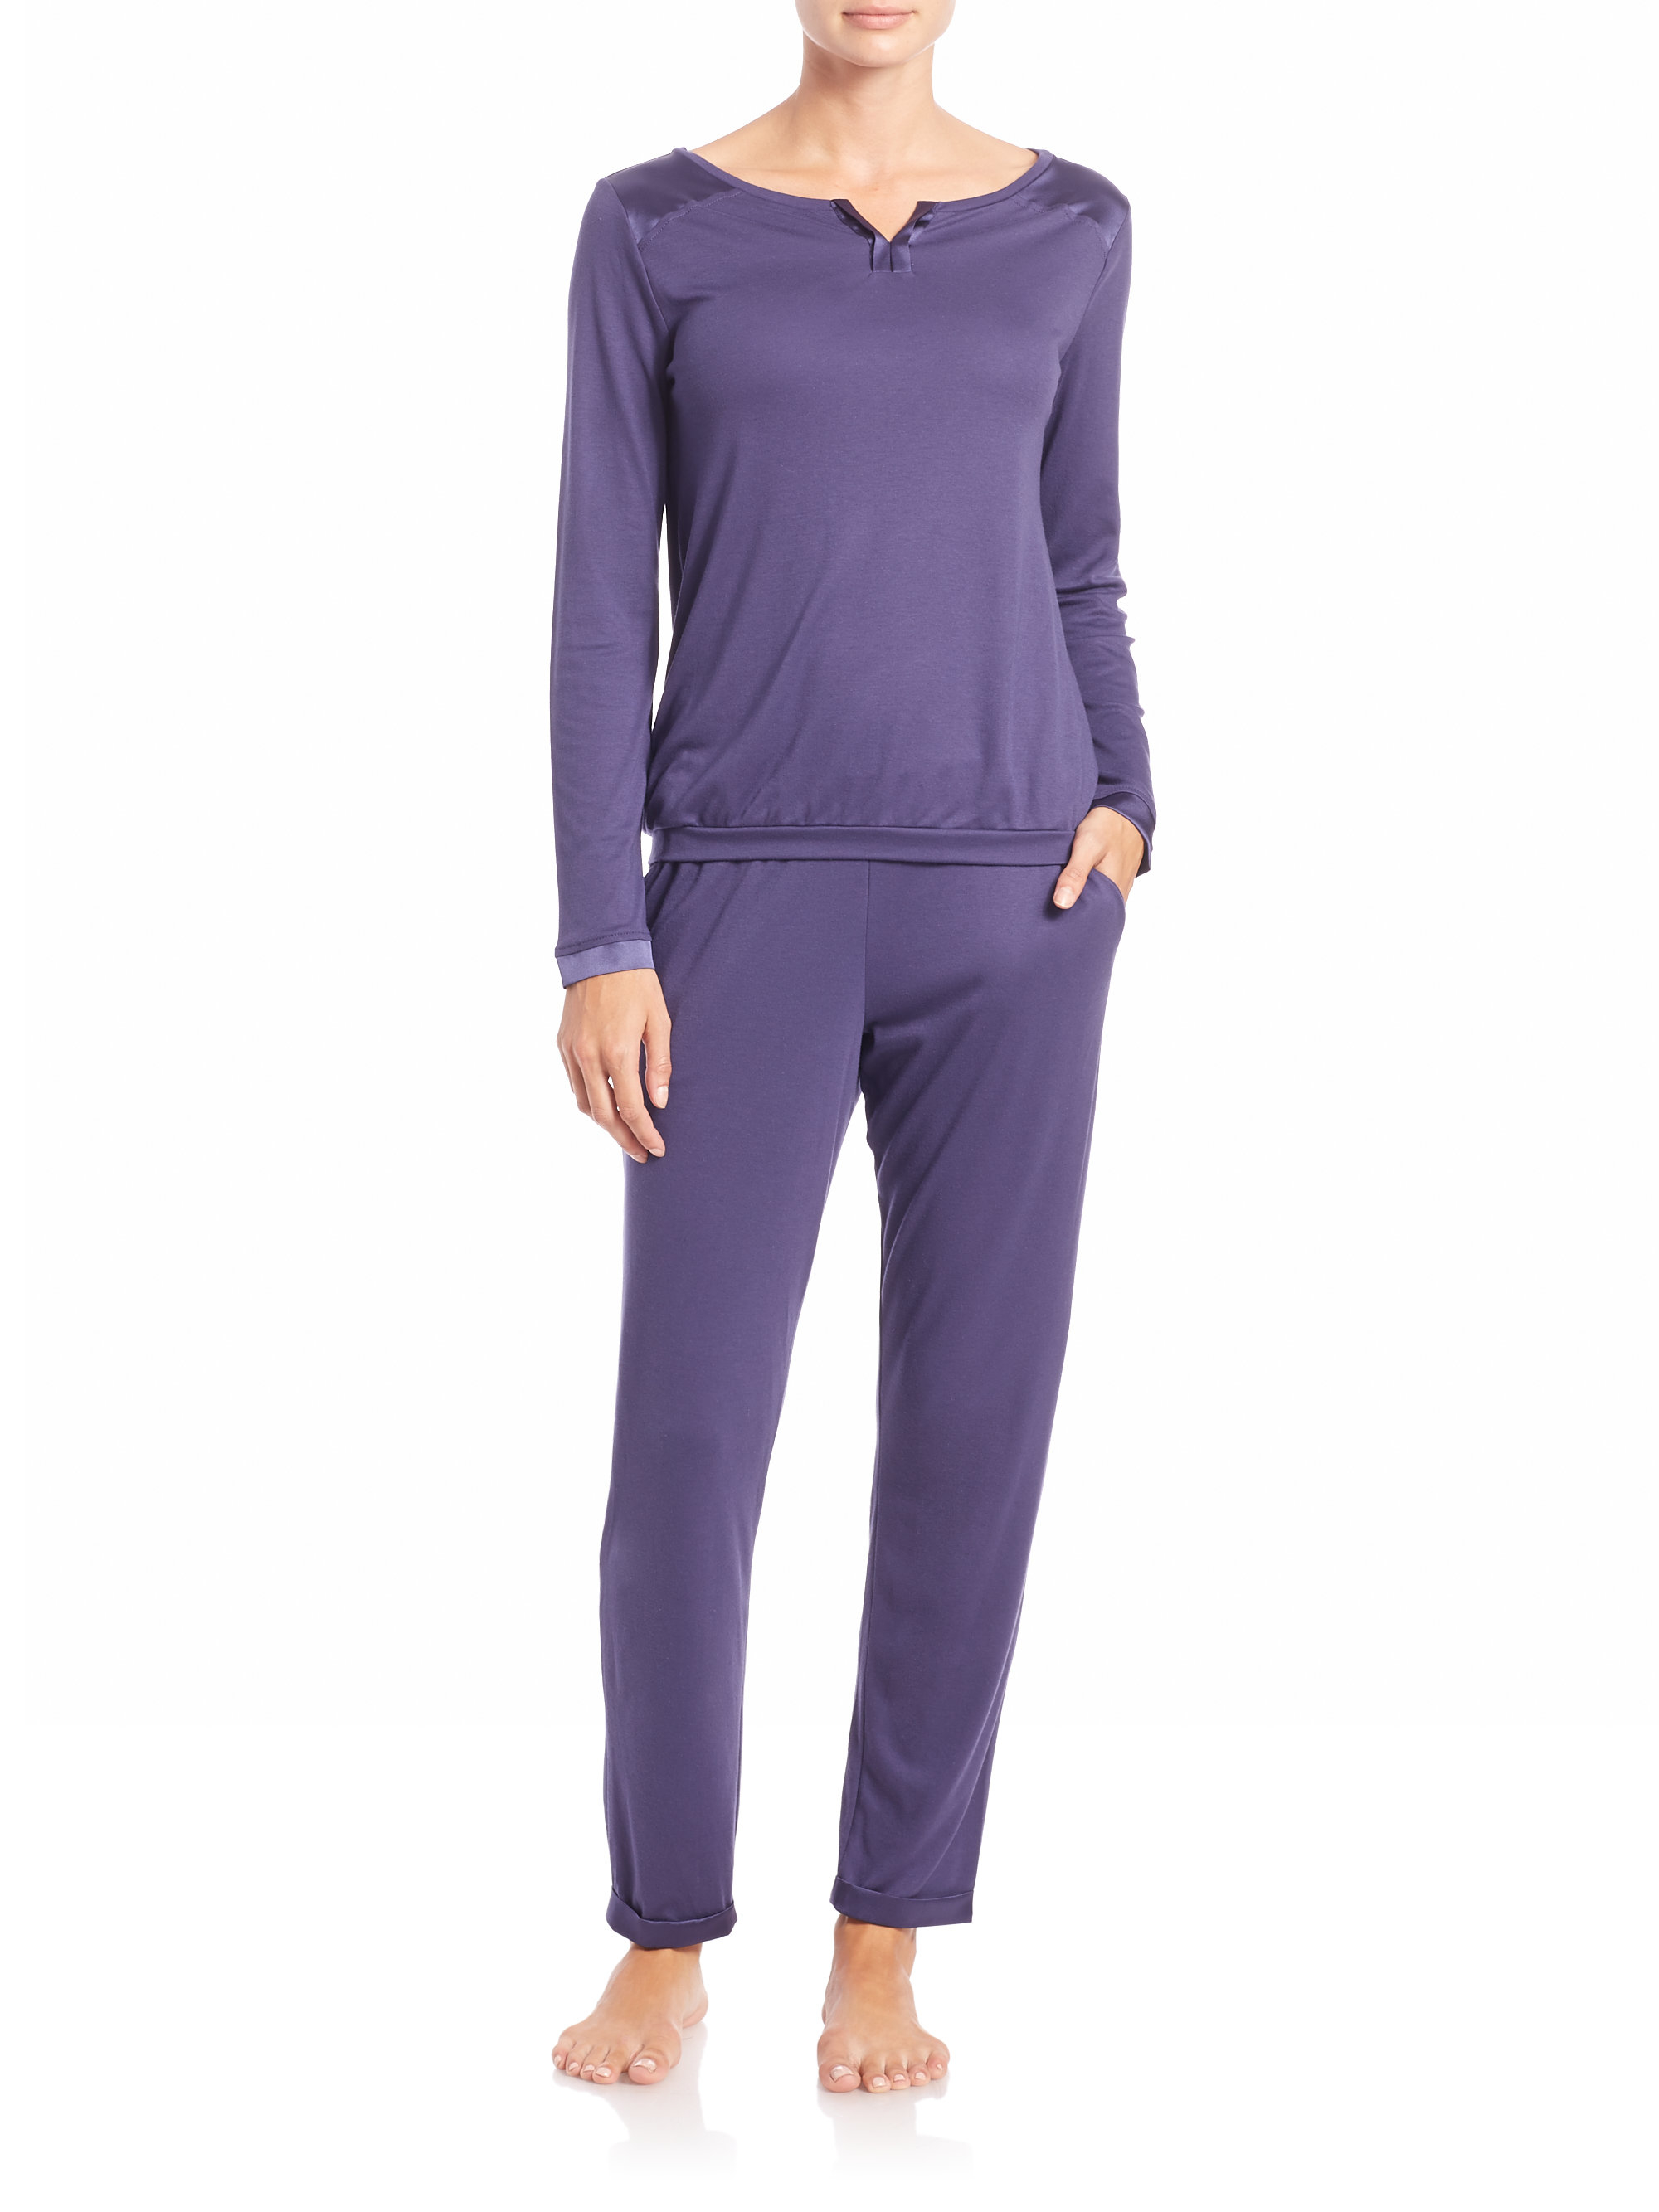 Lyst - Hanro Garance Pajamas in Purple